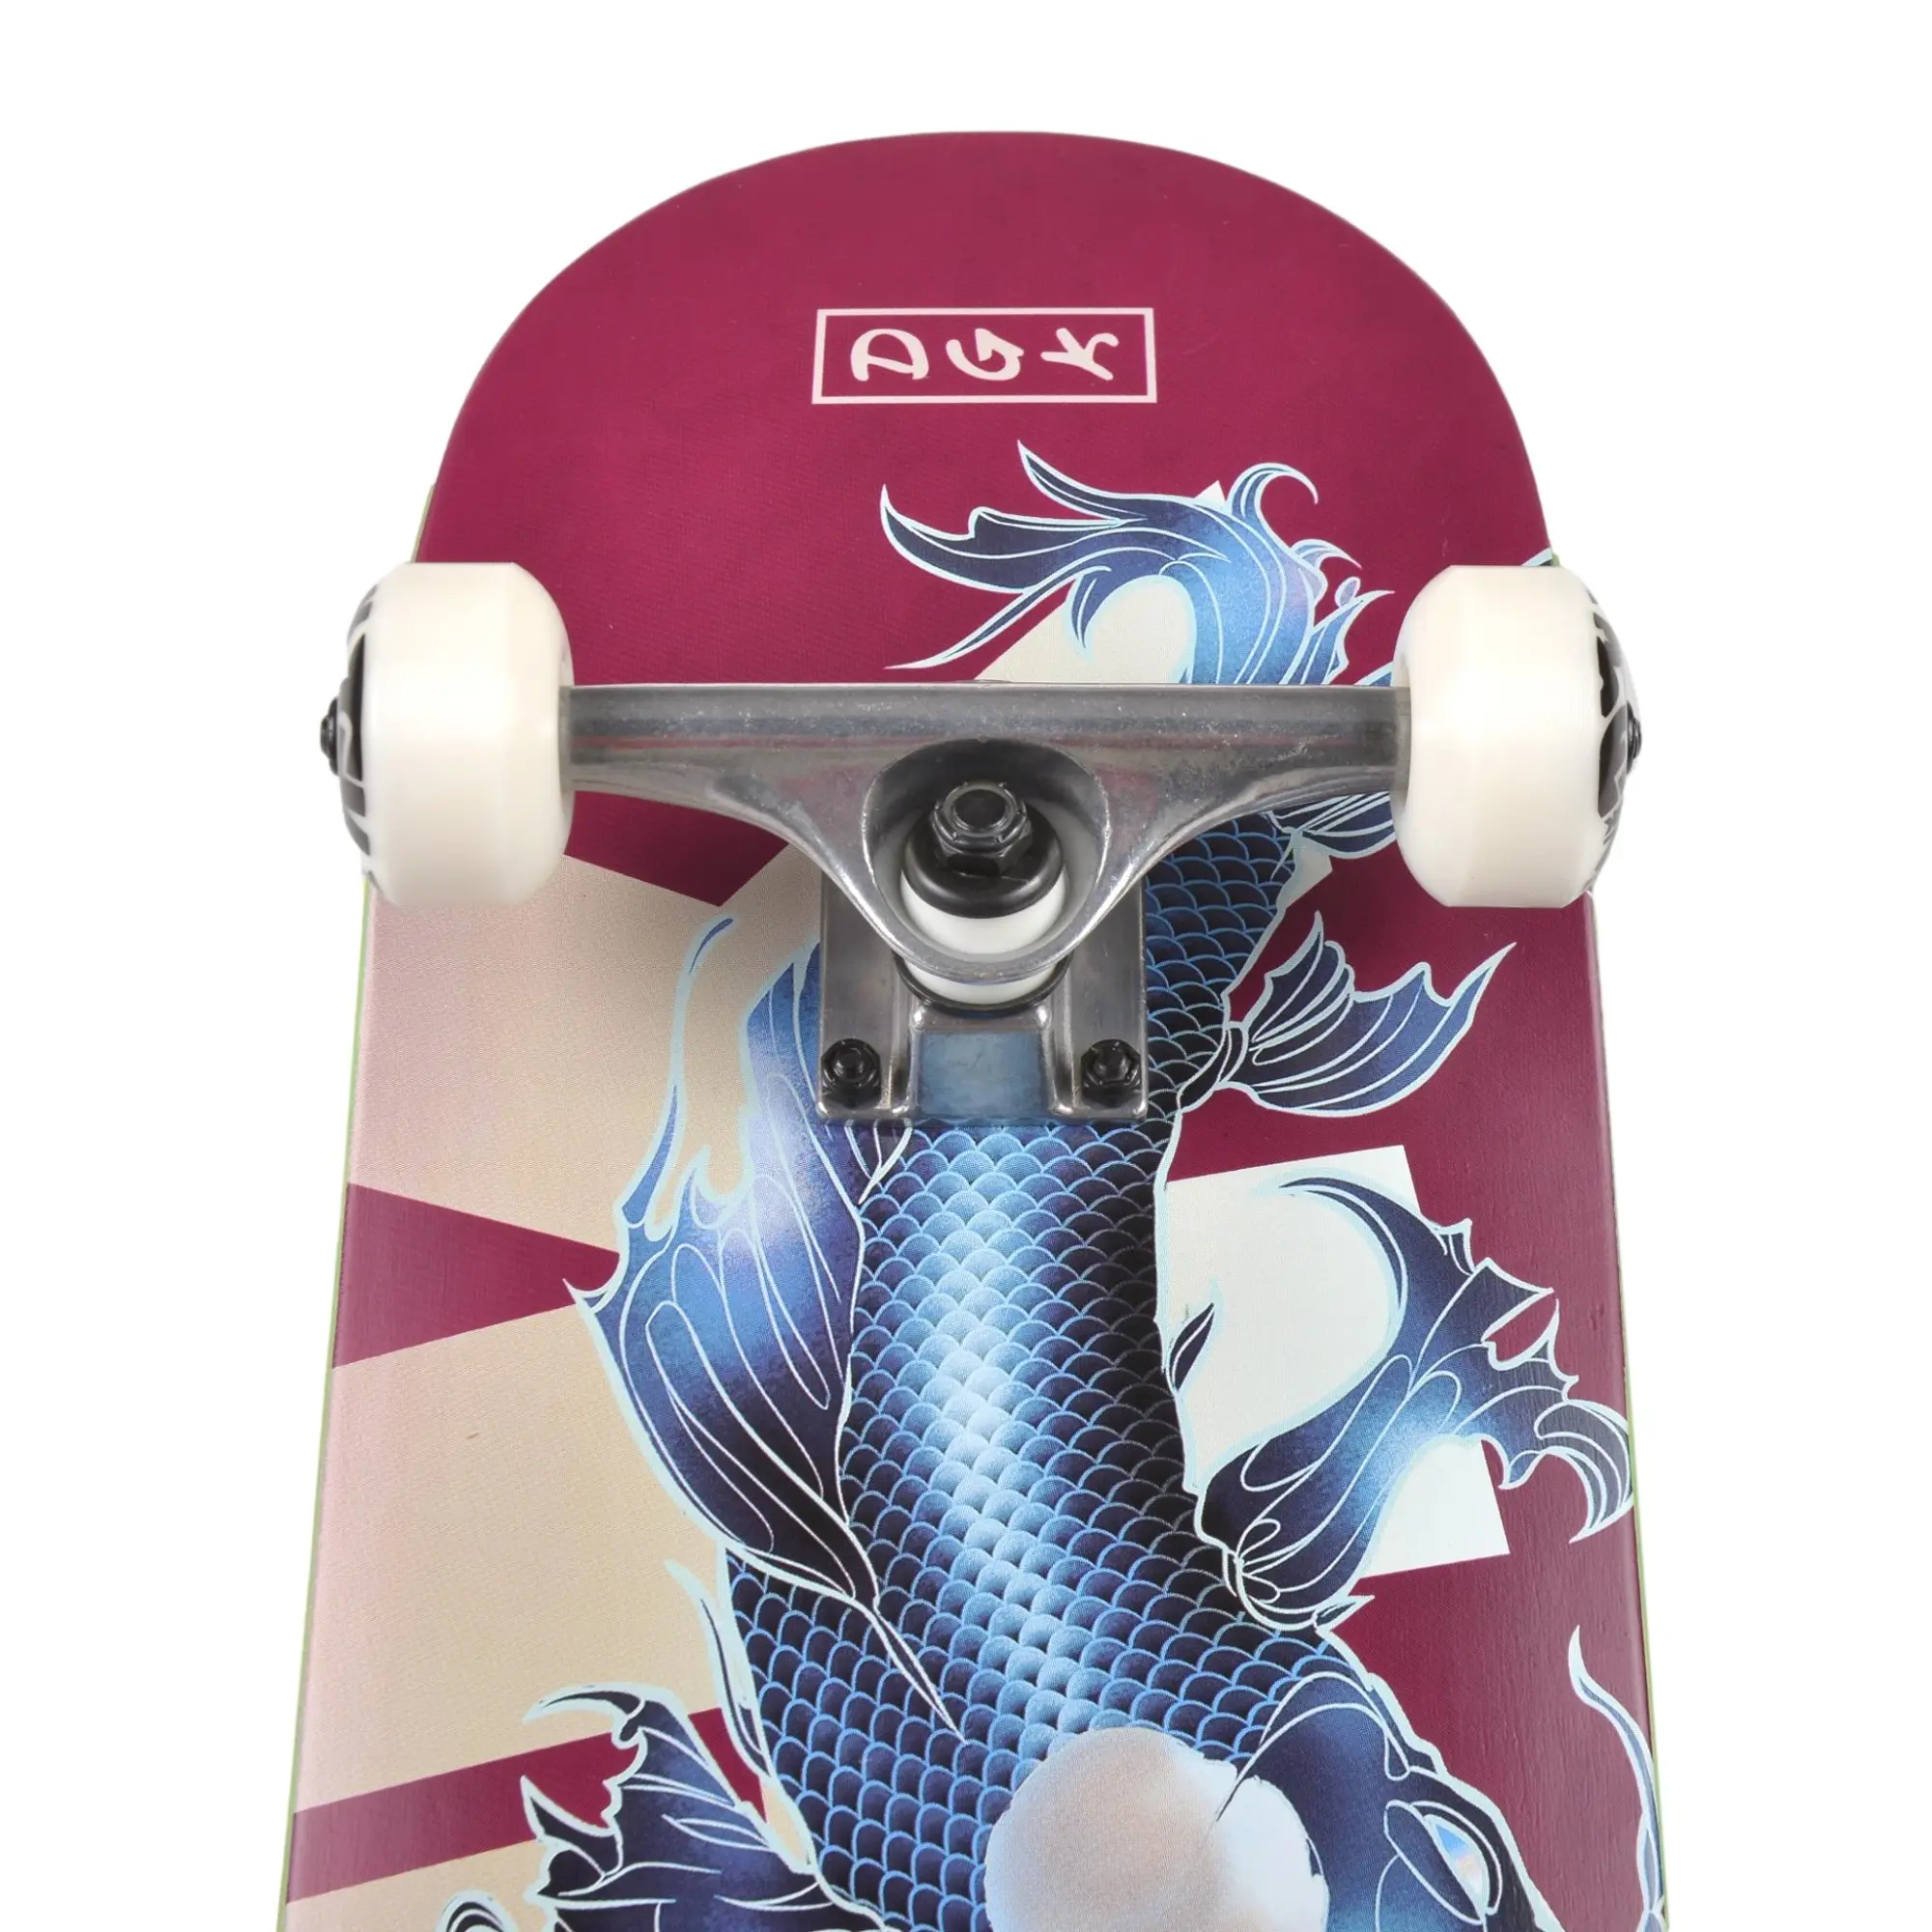 Dgk Yin Yang Skateboard Completo 8.0